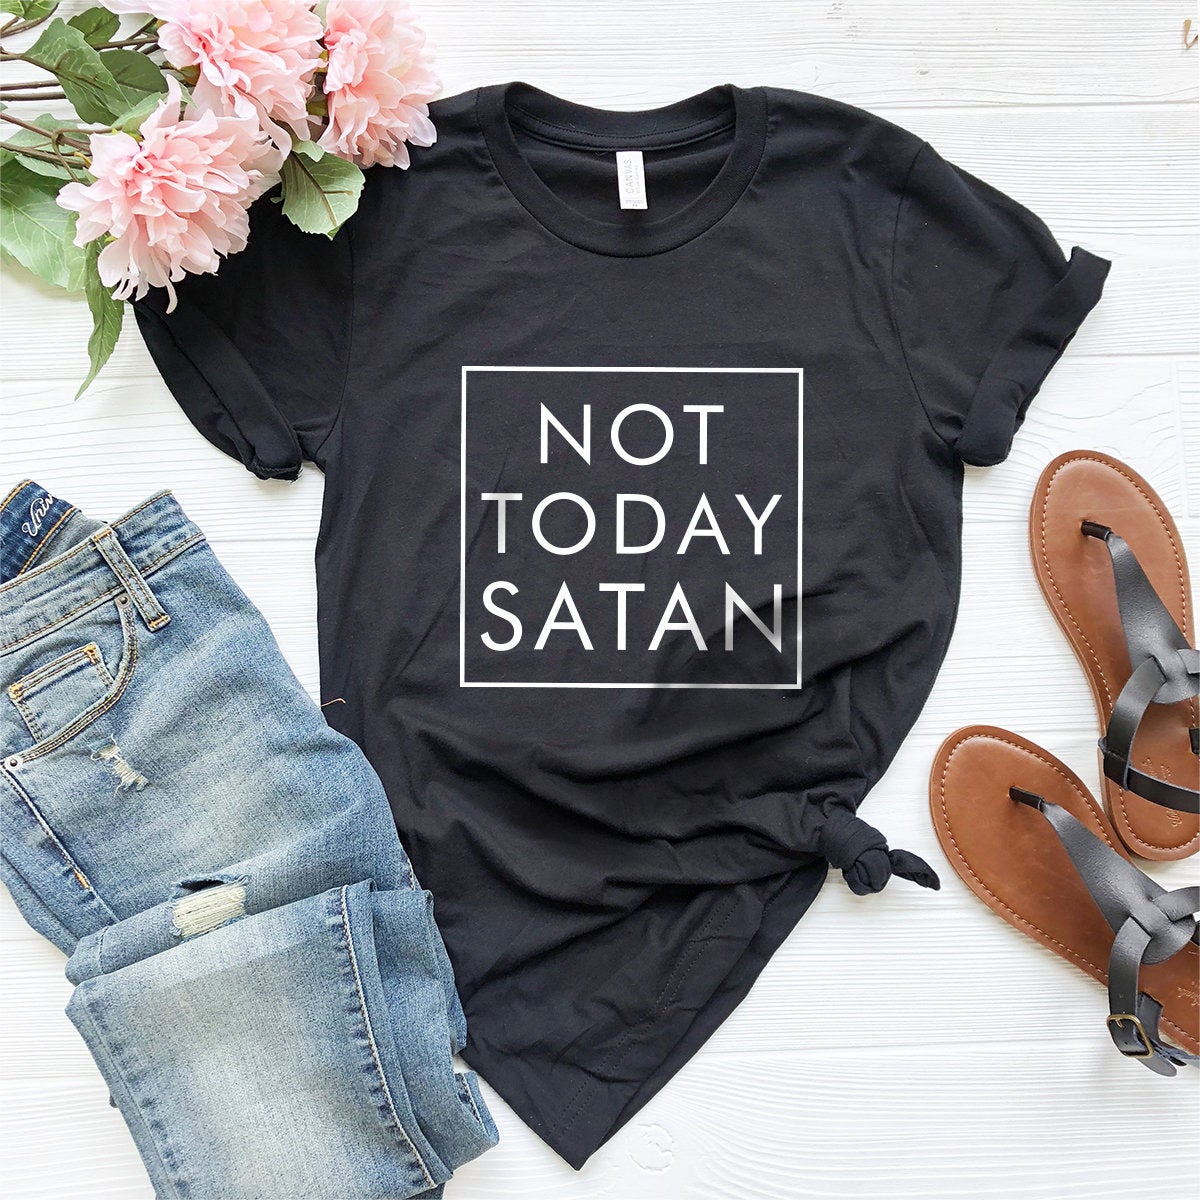 Not Today Satan Shirt, Christian T-Shirt, Faith Shirt, Jesus Clothing, Church Tee, Faith Based Shirt, Religious Shirt, Jesus Shirt - Fastdeliverytees.com